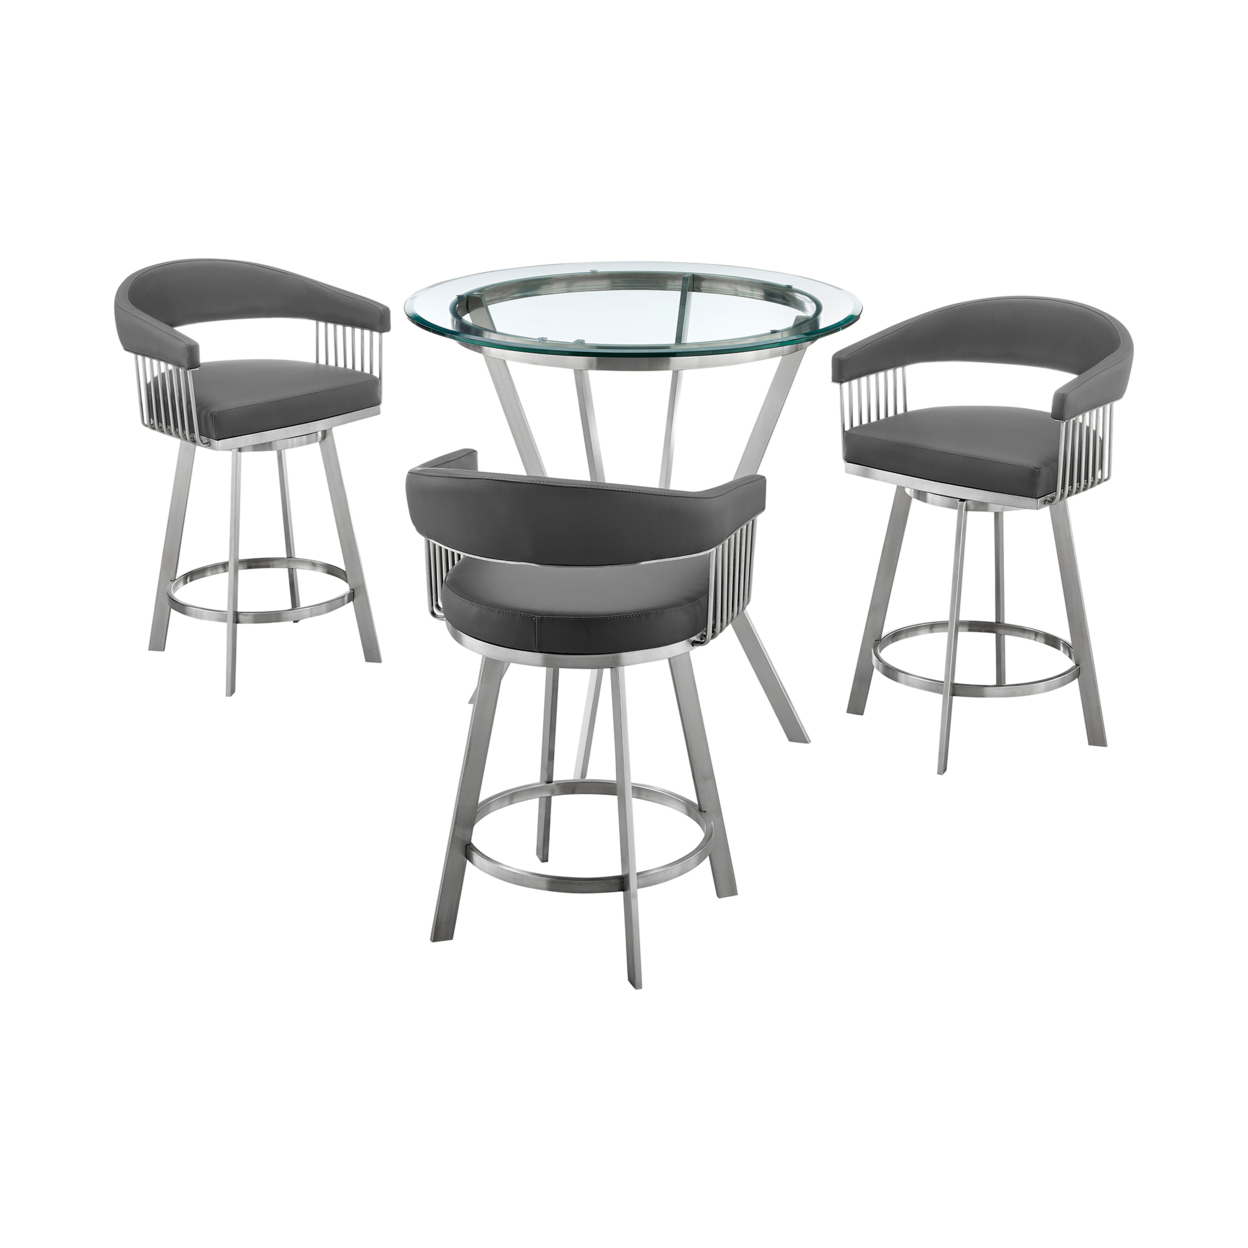 Mia 4 Piece Counter Height Dining Table Set, Round Glass Top, Chrome, Gray- Saltoro Sherpi